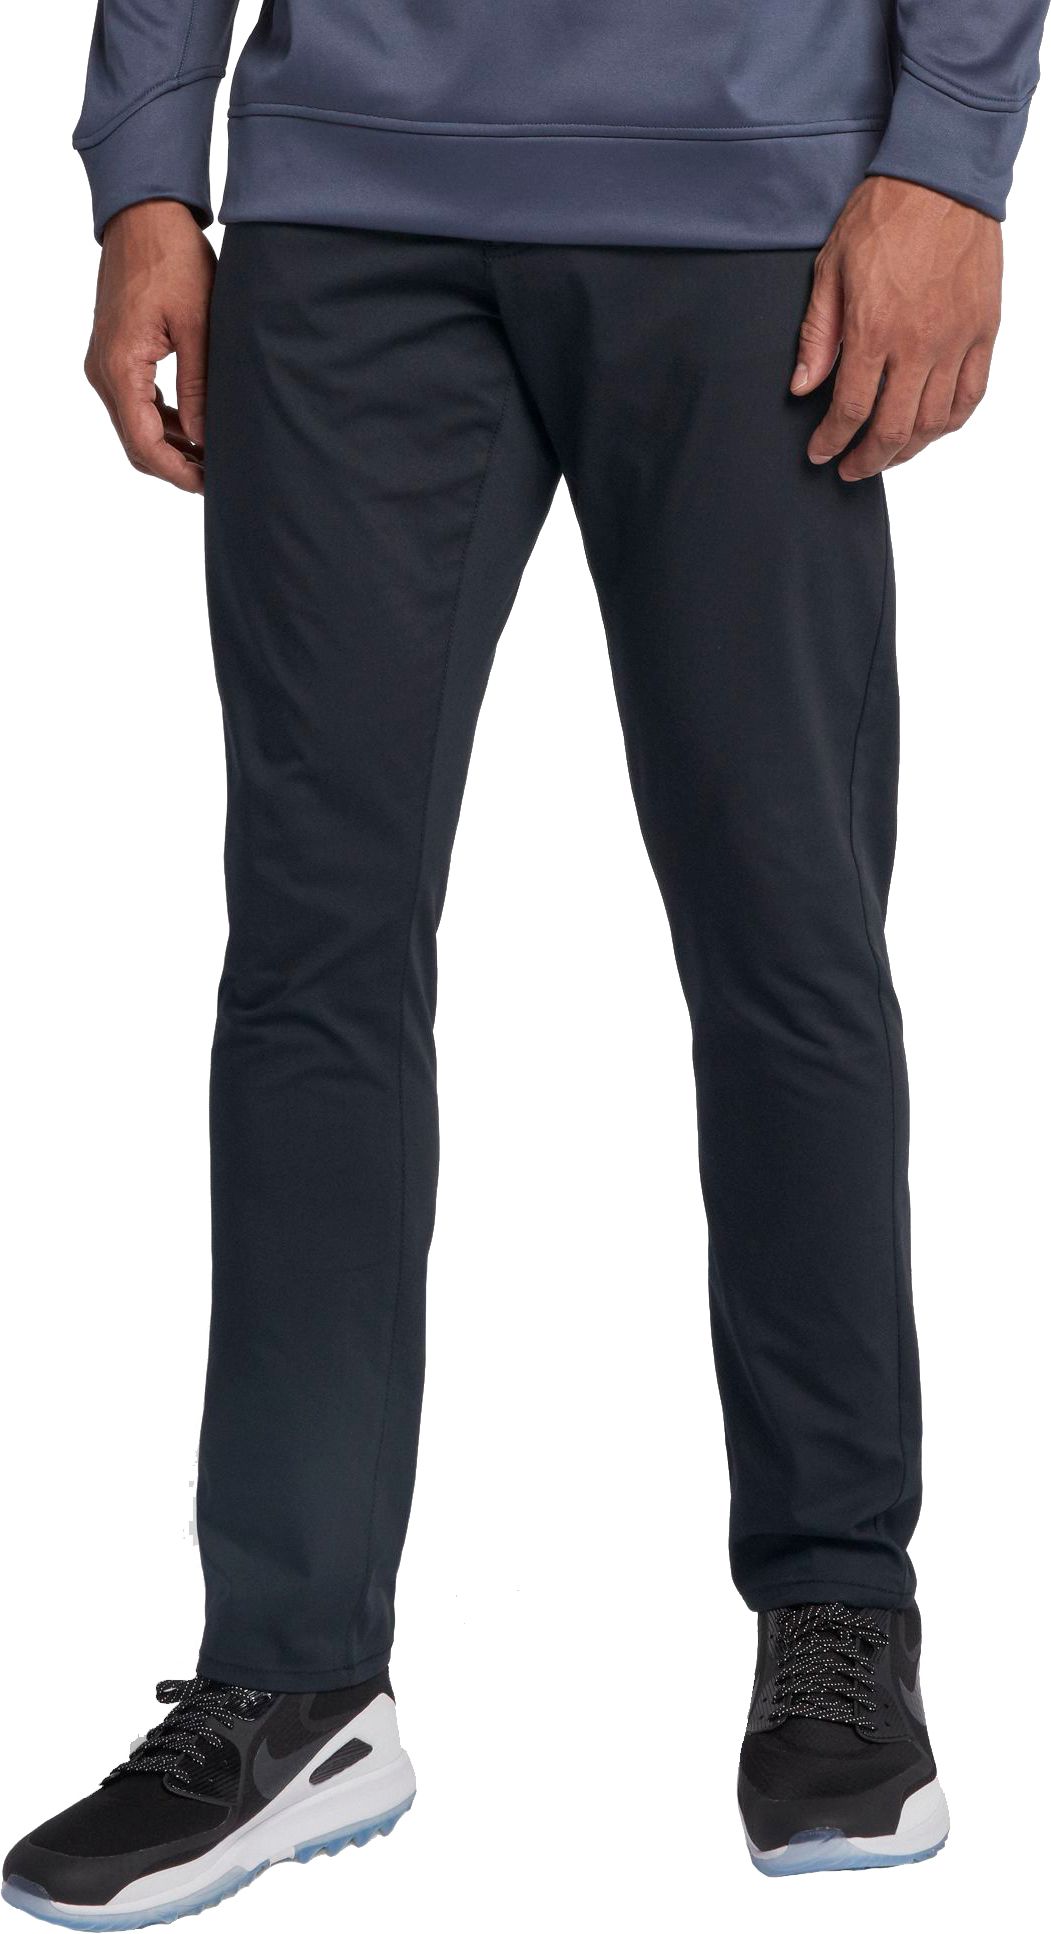 Nike Men's Slim Flex 5 Pocket Golf Pants - .97 - .97